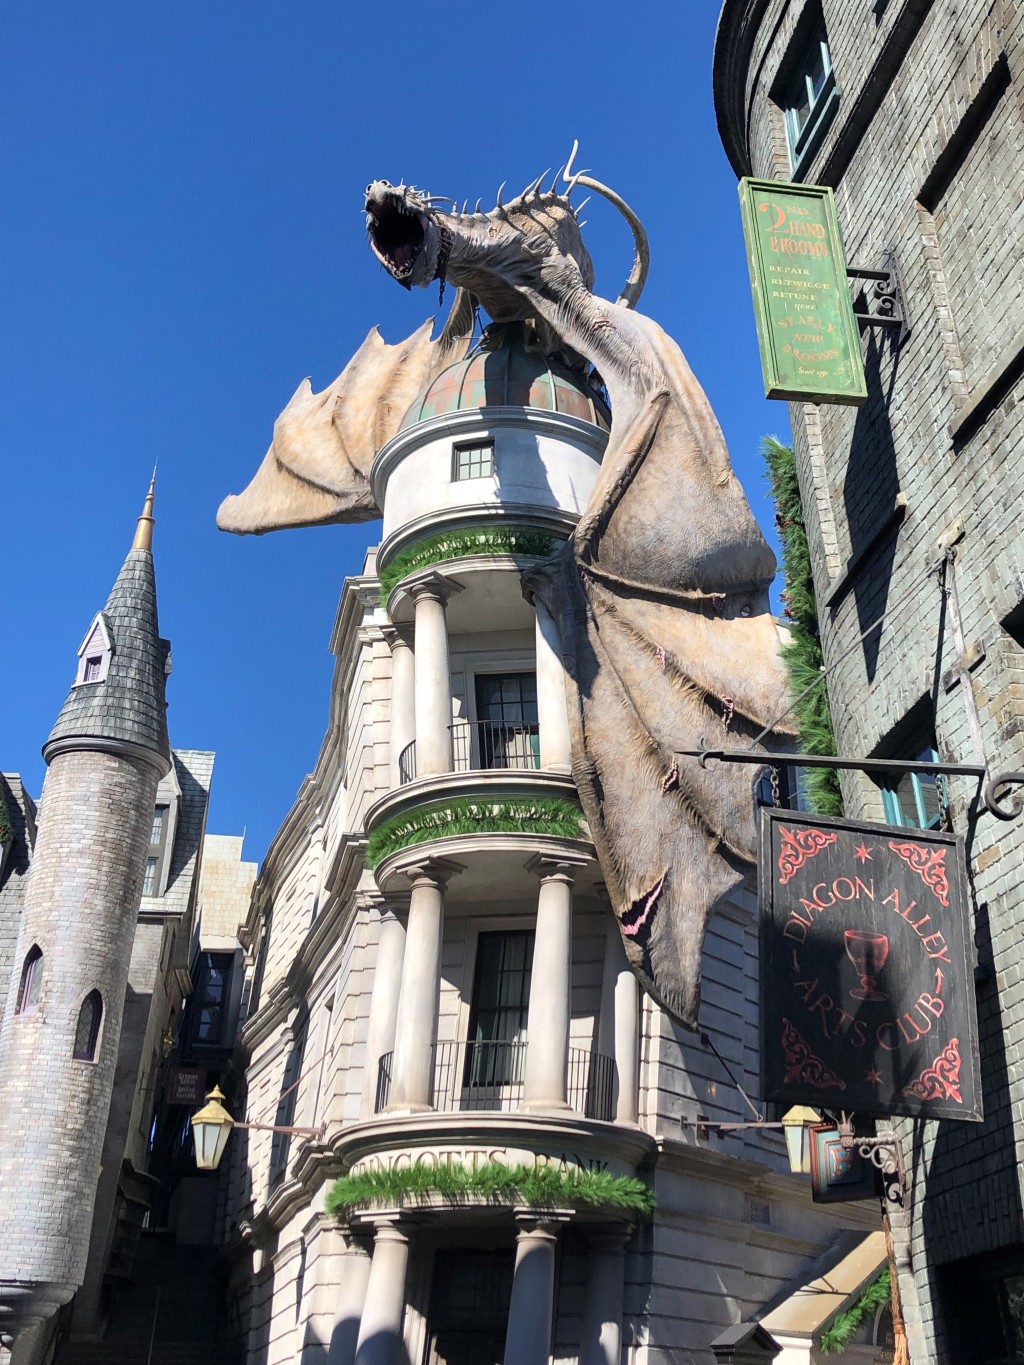 Tips for Visiting Harry Potter World at Universal Studios Orlando